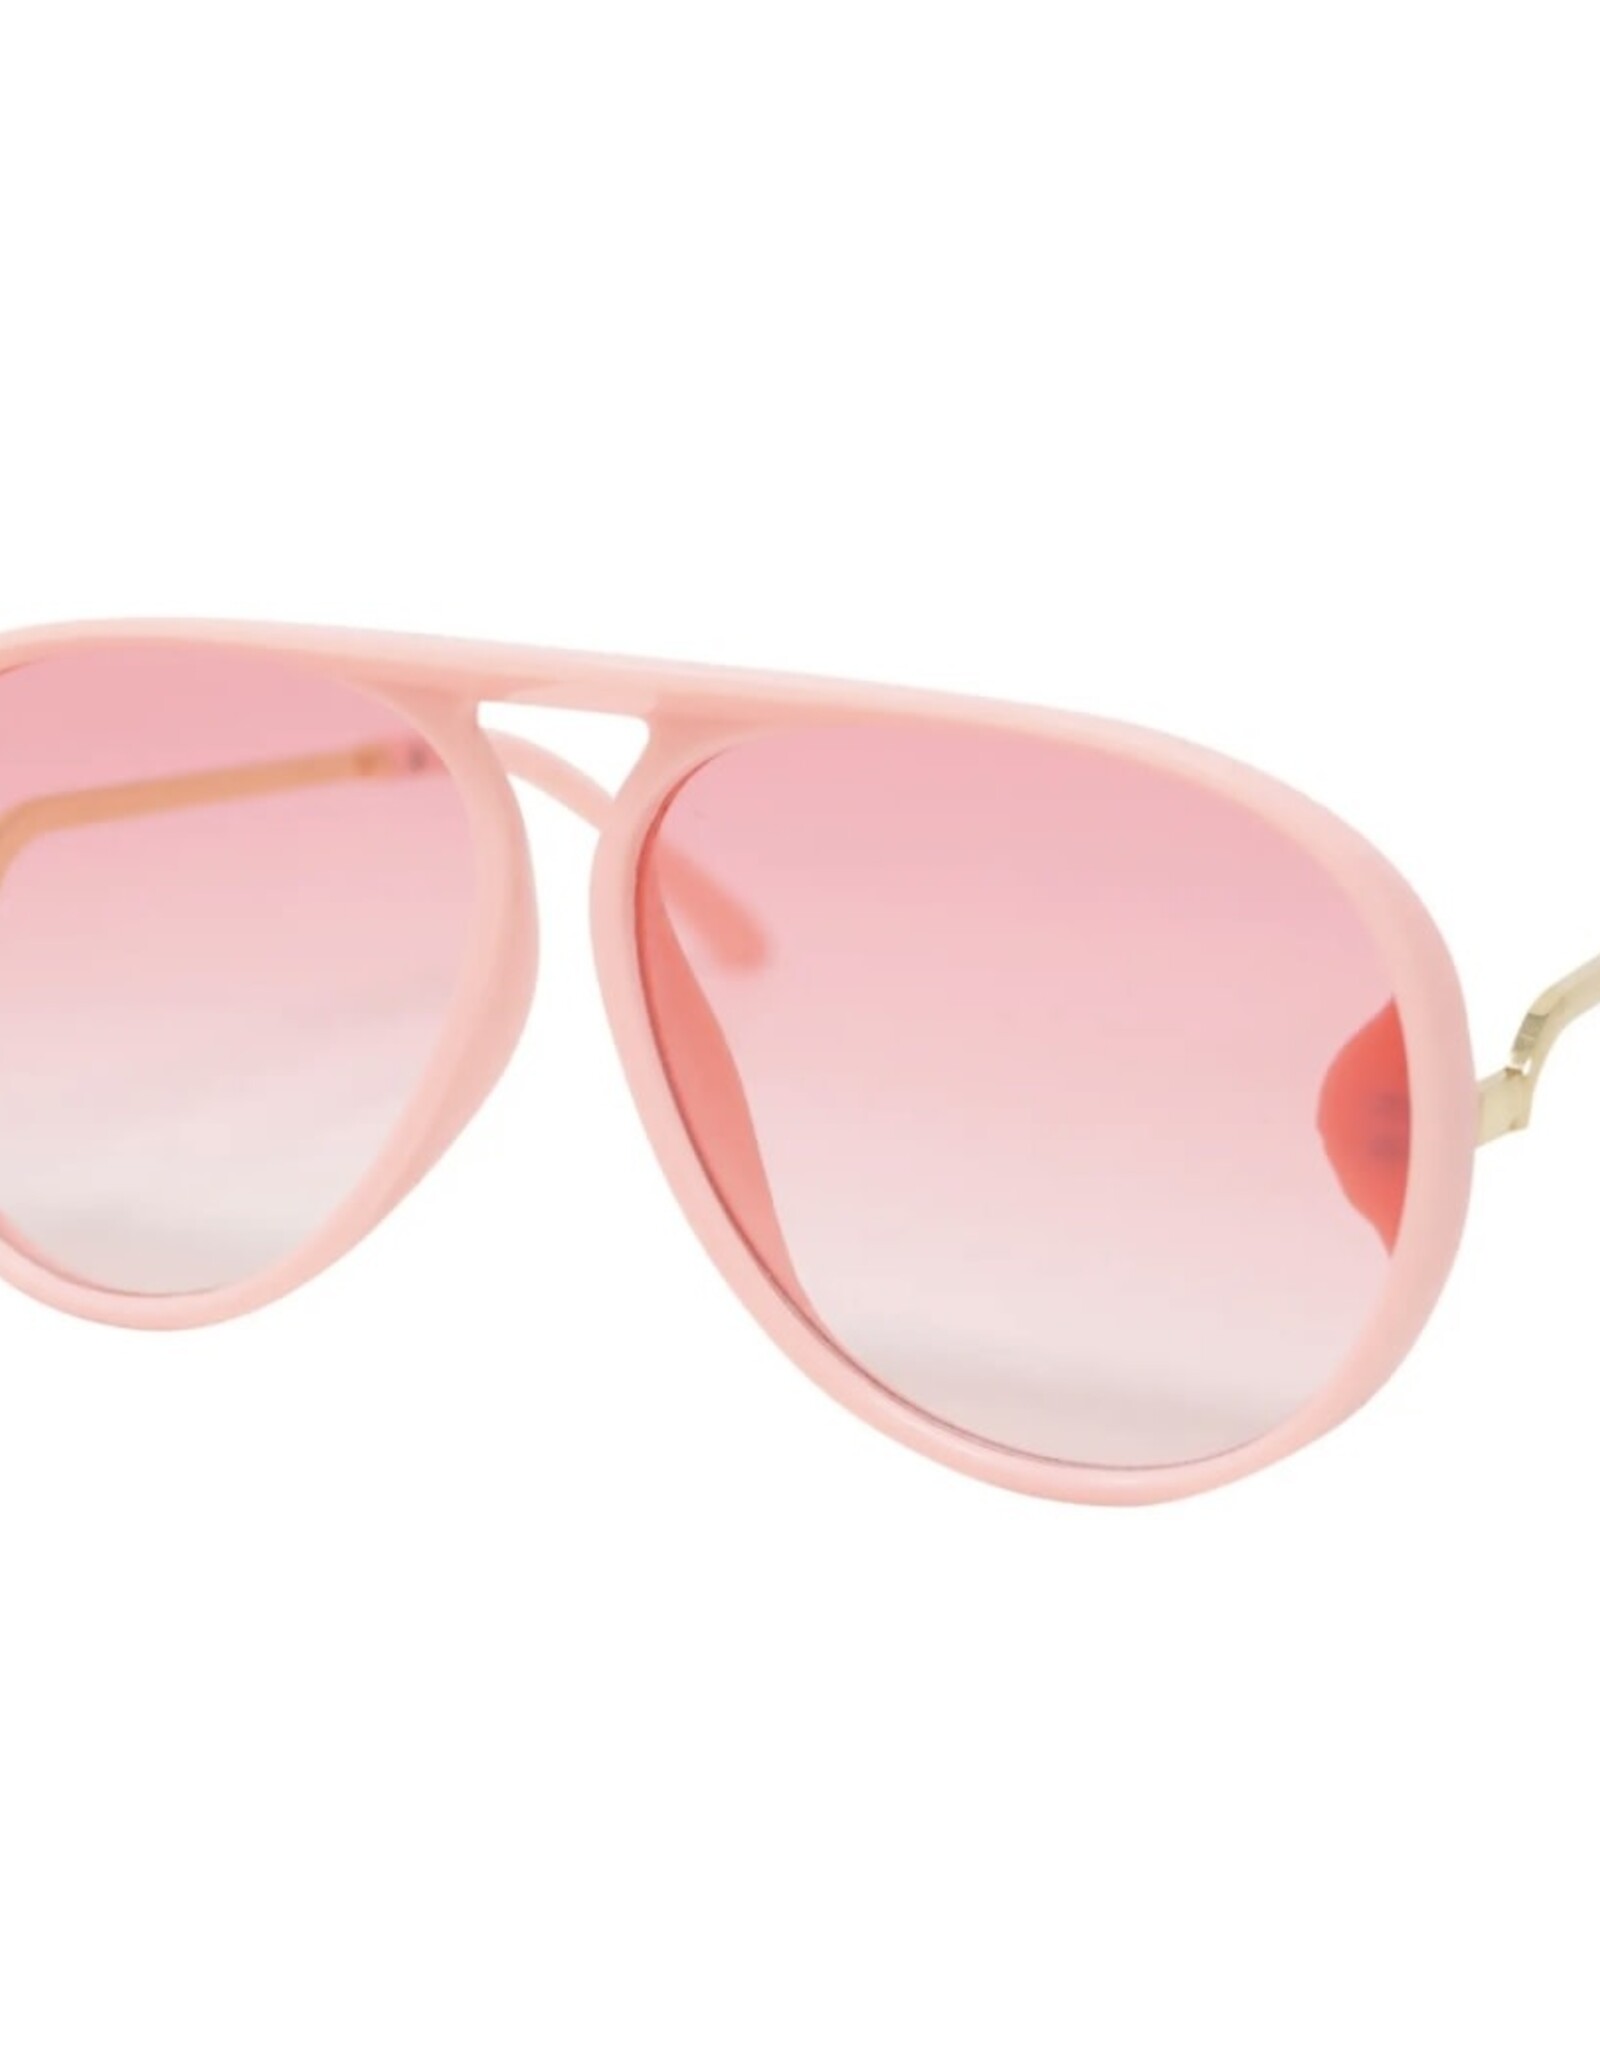 Zomi Gems Aviator Teardrop Sunglasses in Pink